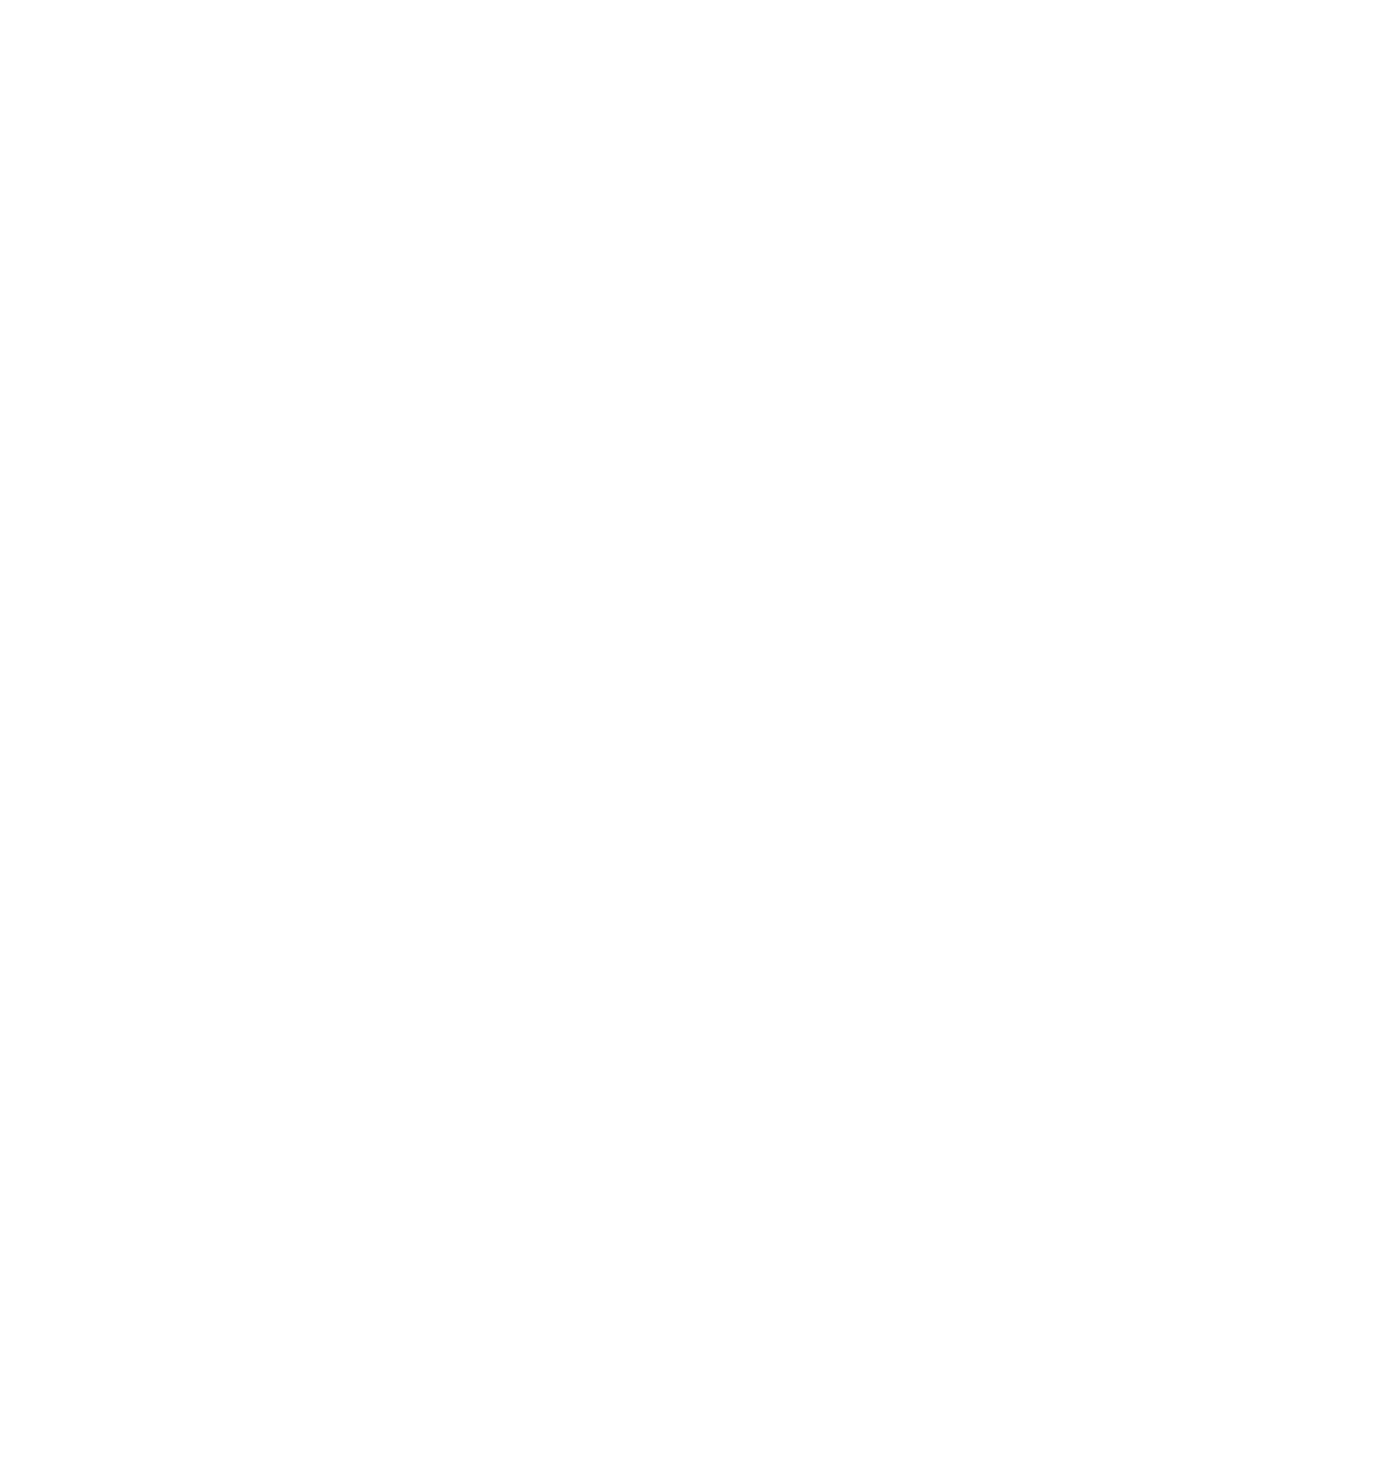 San Francisco Overland